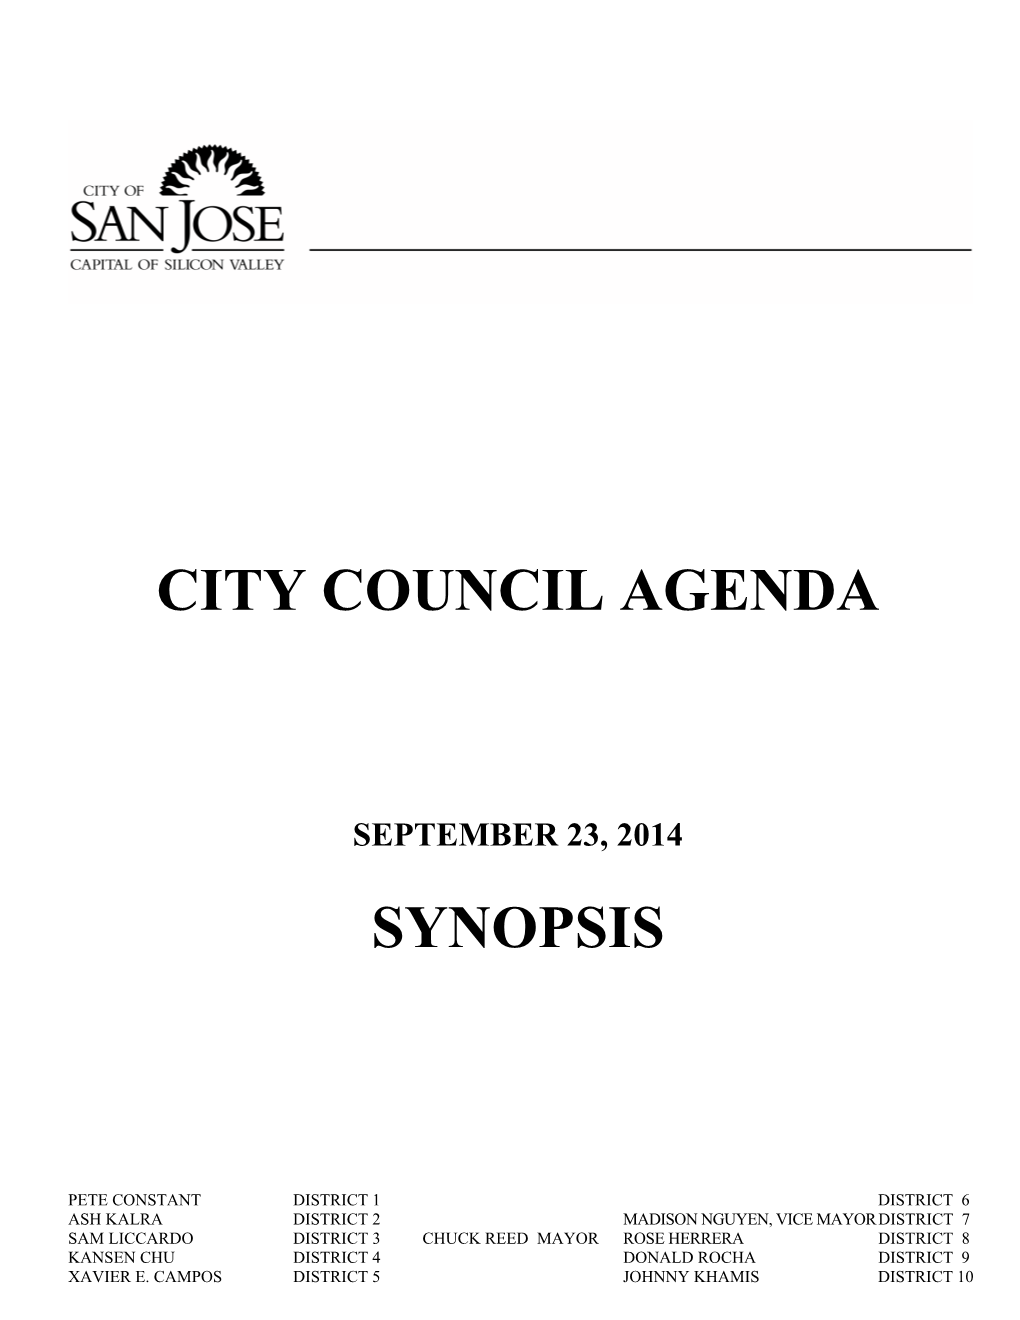 City Council Agenda Synopsis